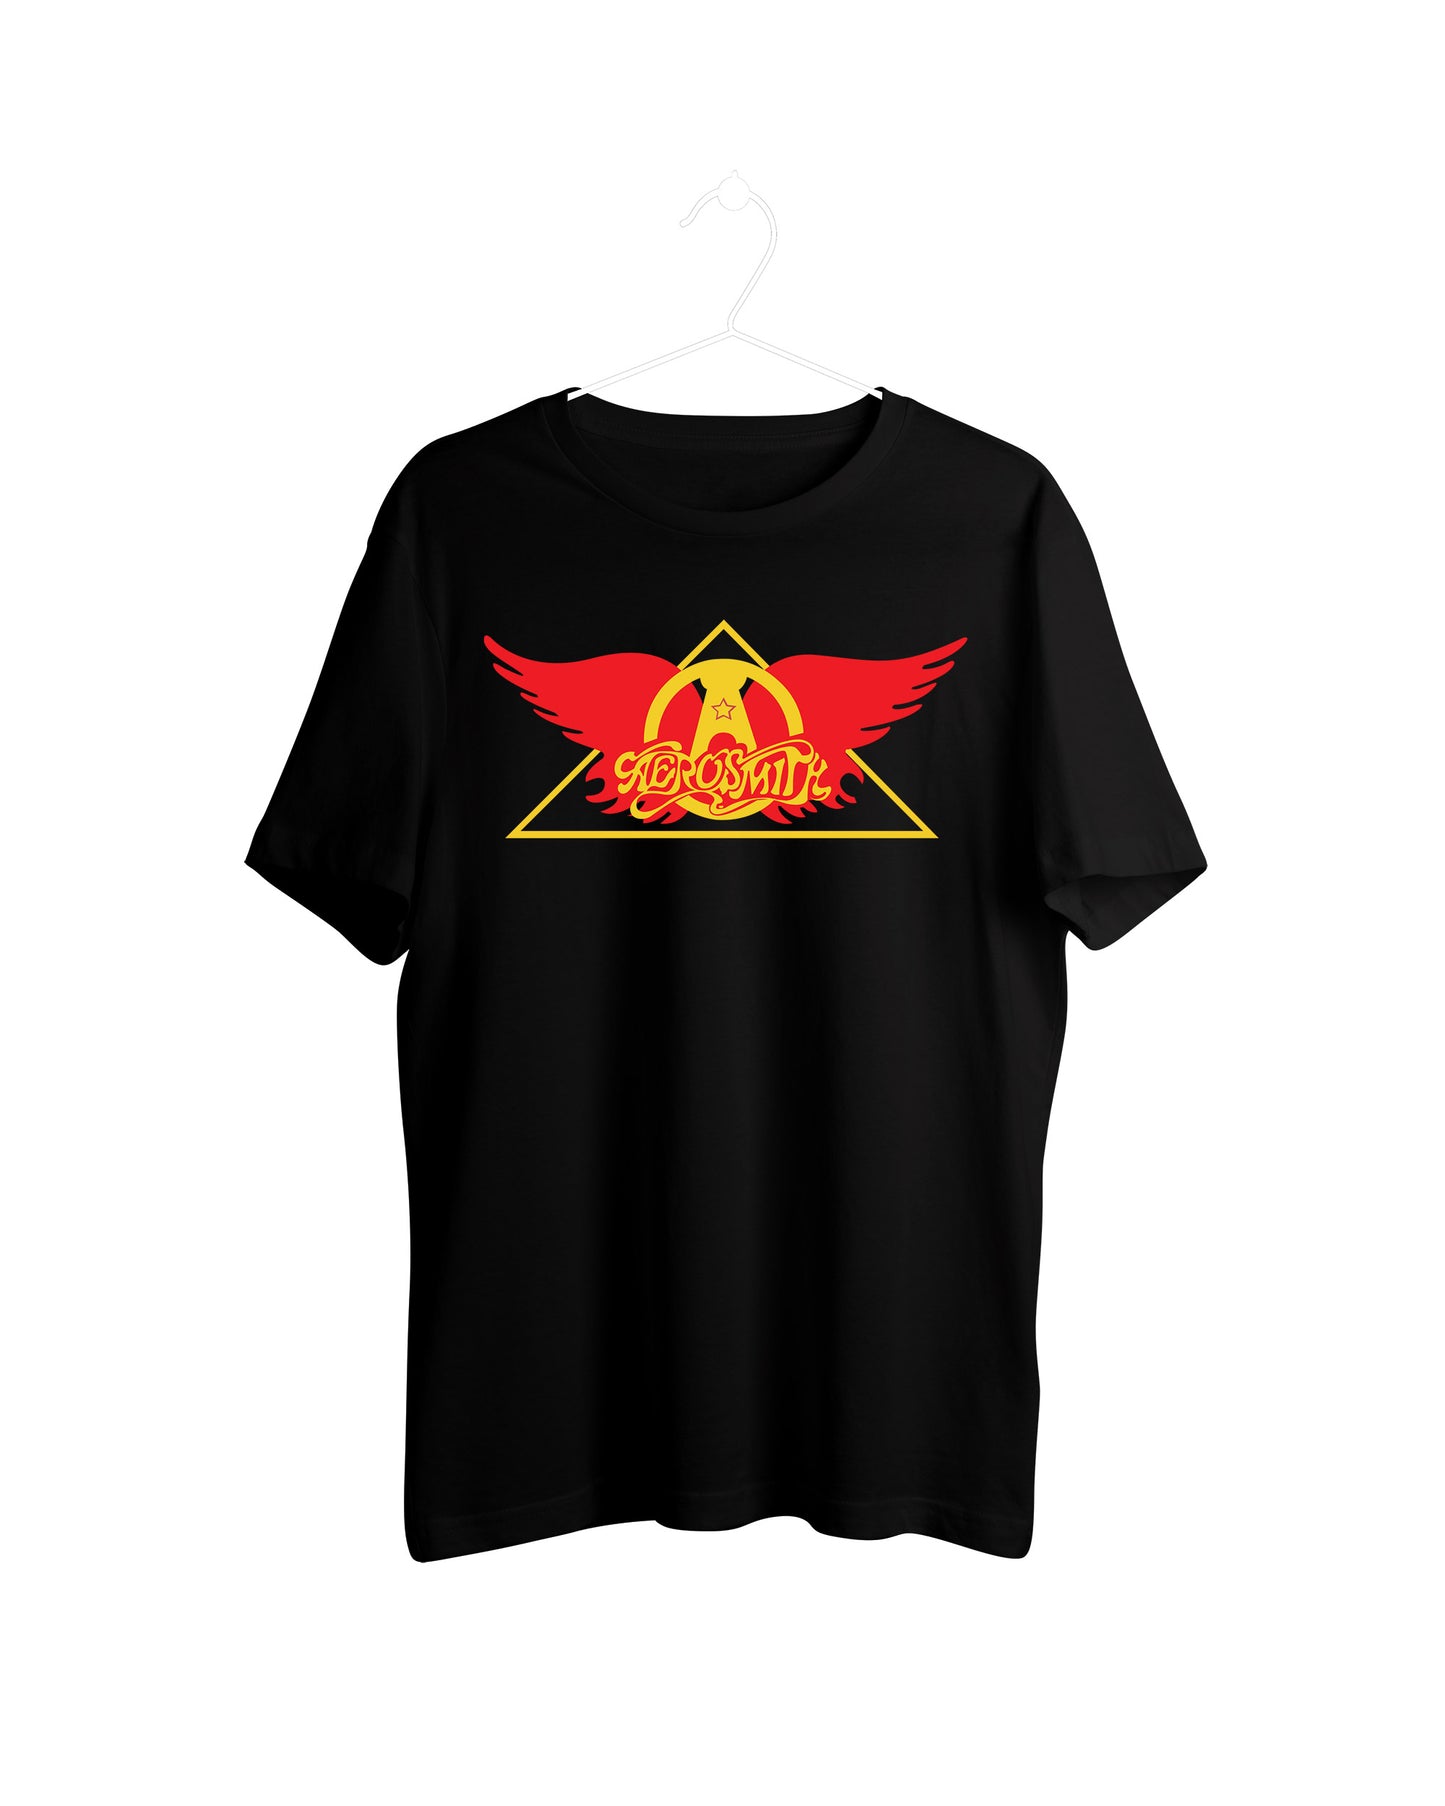 Aerosmith - Digital Graphics Basic T-shirt Black